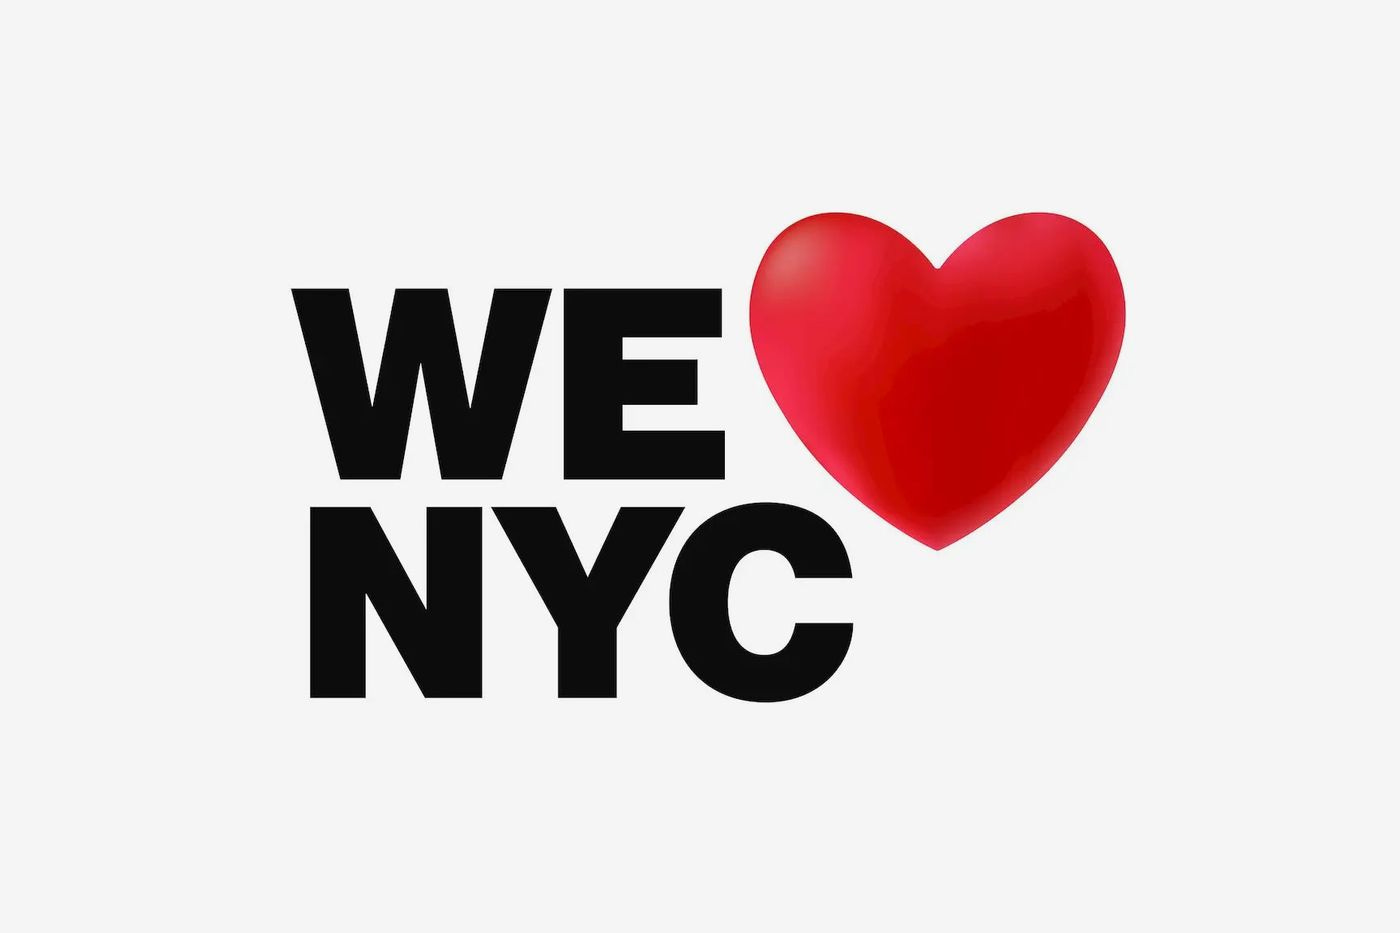 The new "We Love NYC" logo mark